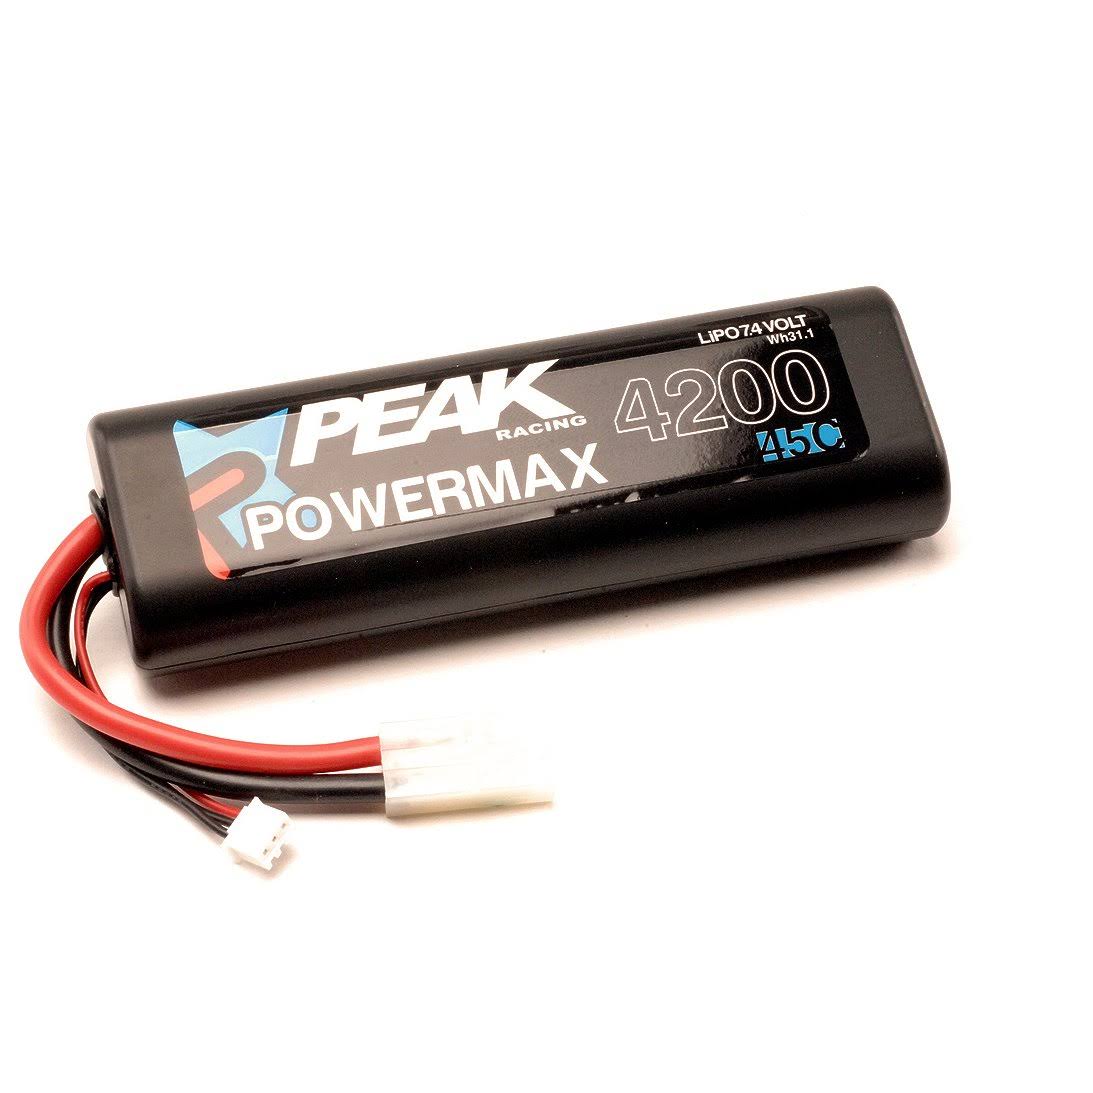 Peak Racing Powermax Sport Battery - 7.4V, 4200mah, Lipo